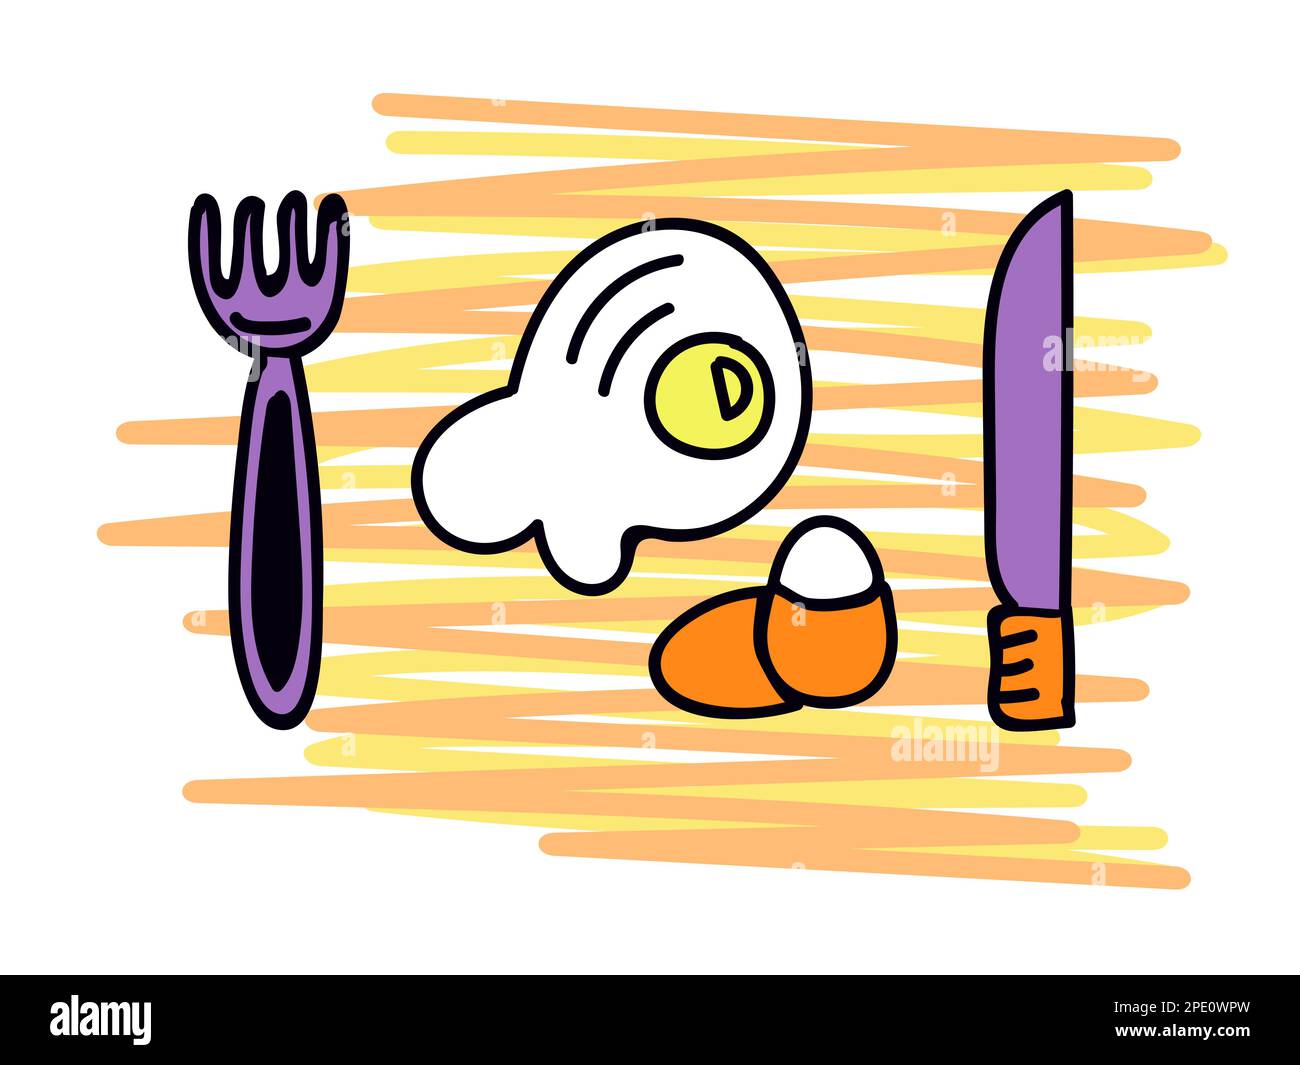 Dinner. Illustration includes eggs, fork and knife Stock Vector